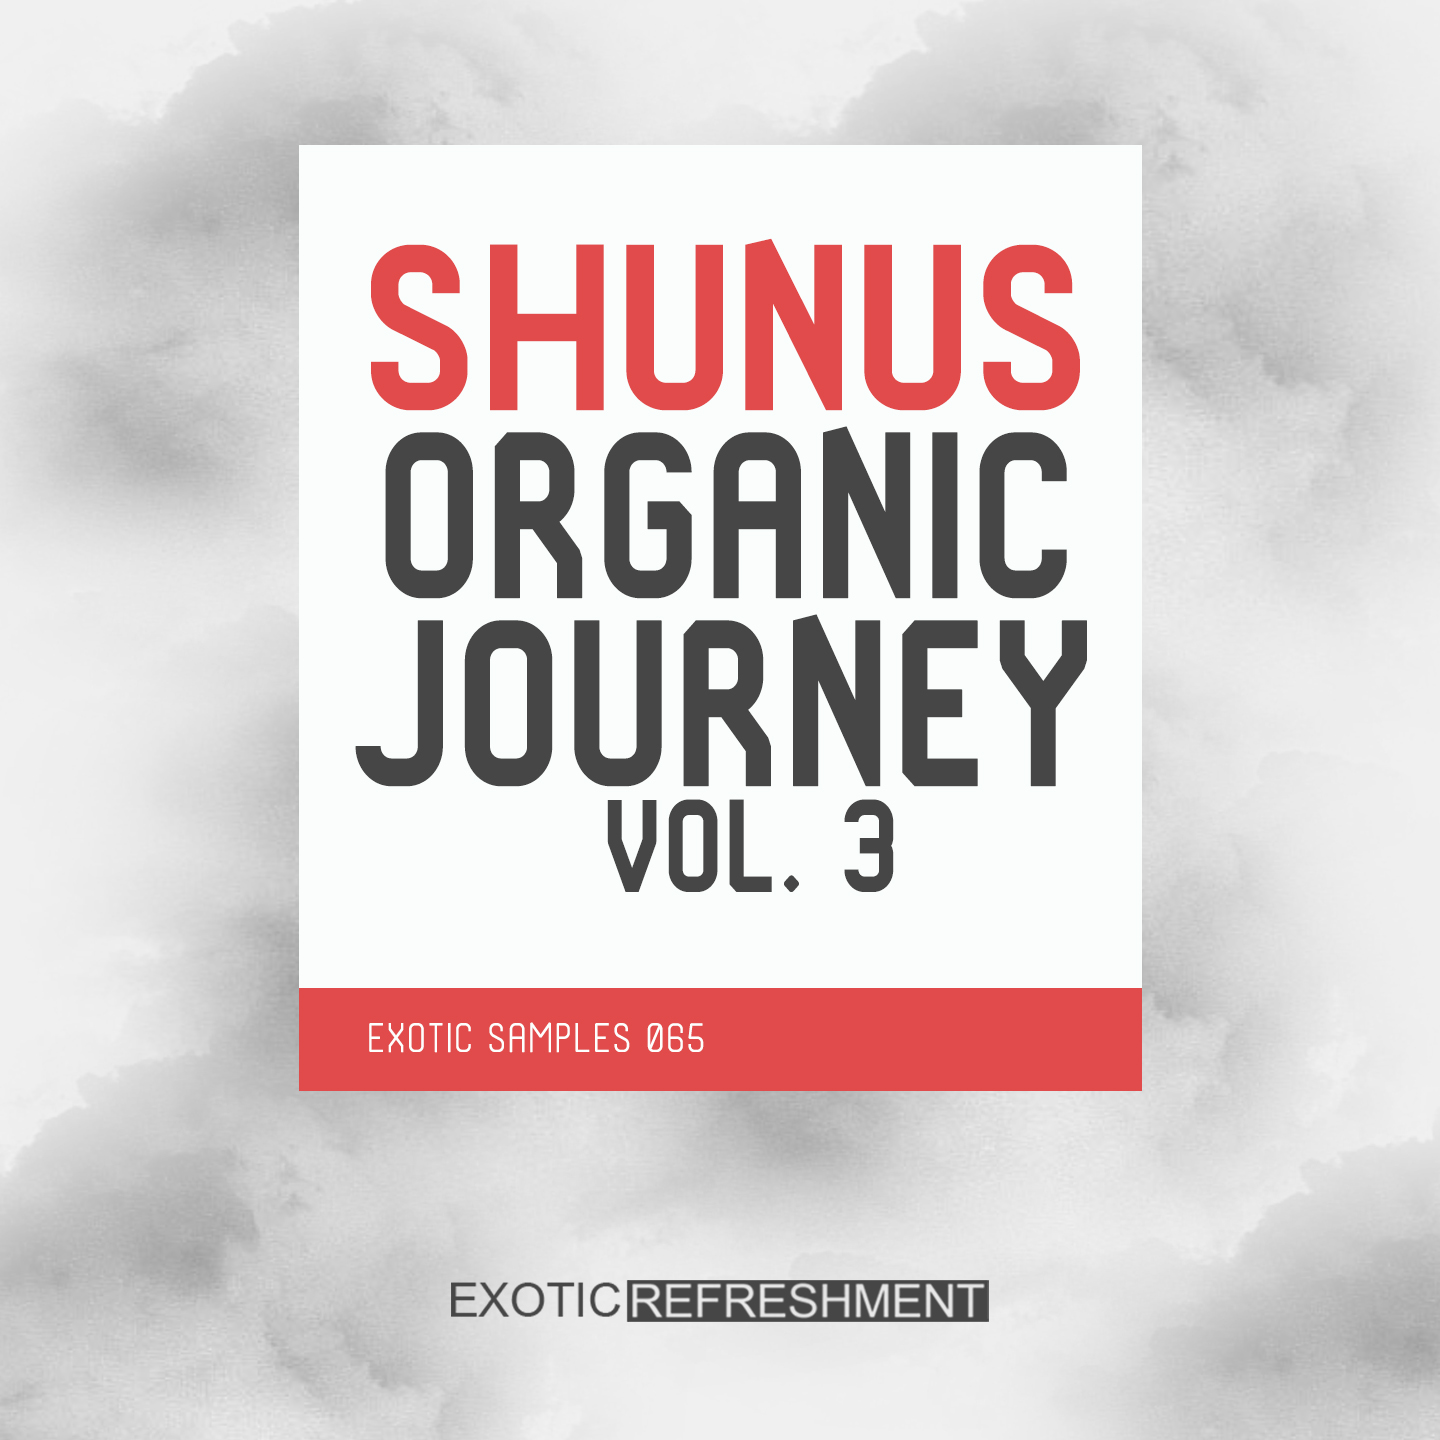 Shunus Organic Journey vol. 3